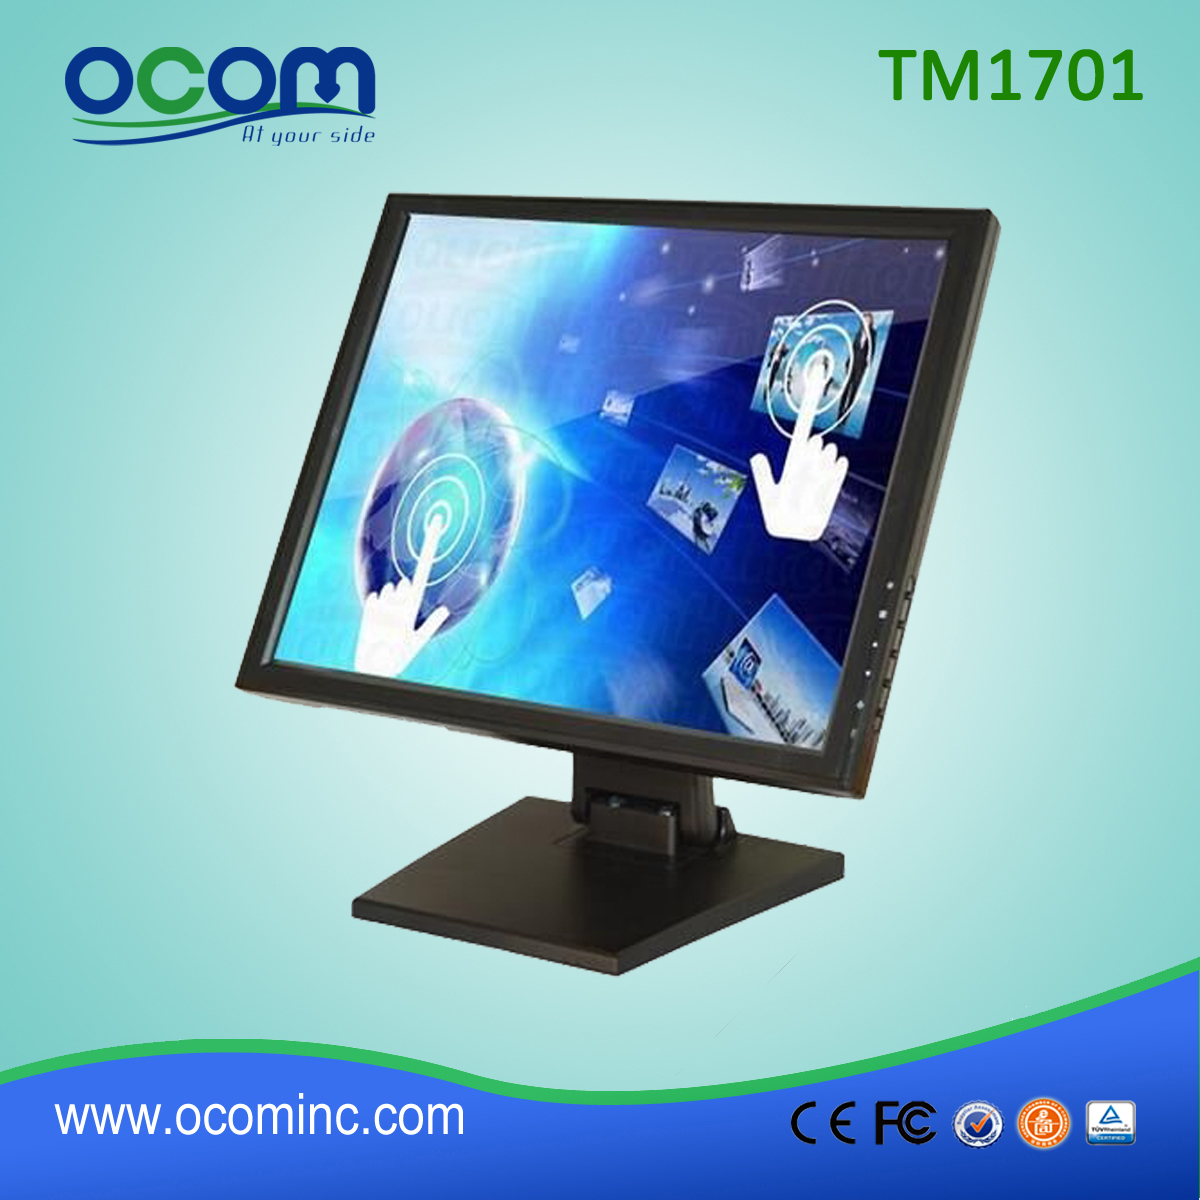 TM1701 LCD 17inch Monitor POS écran tactile